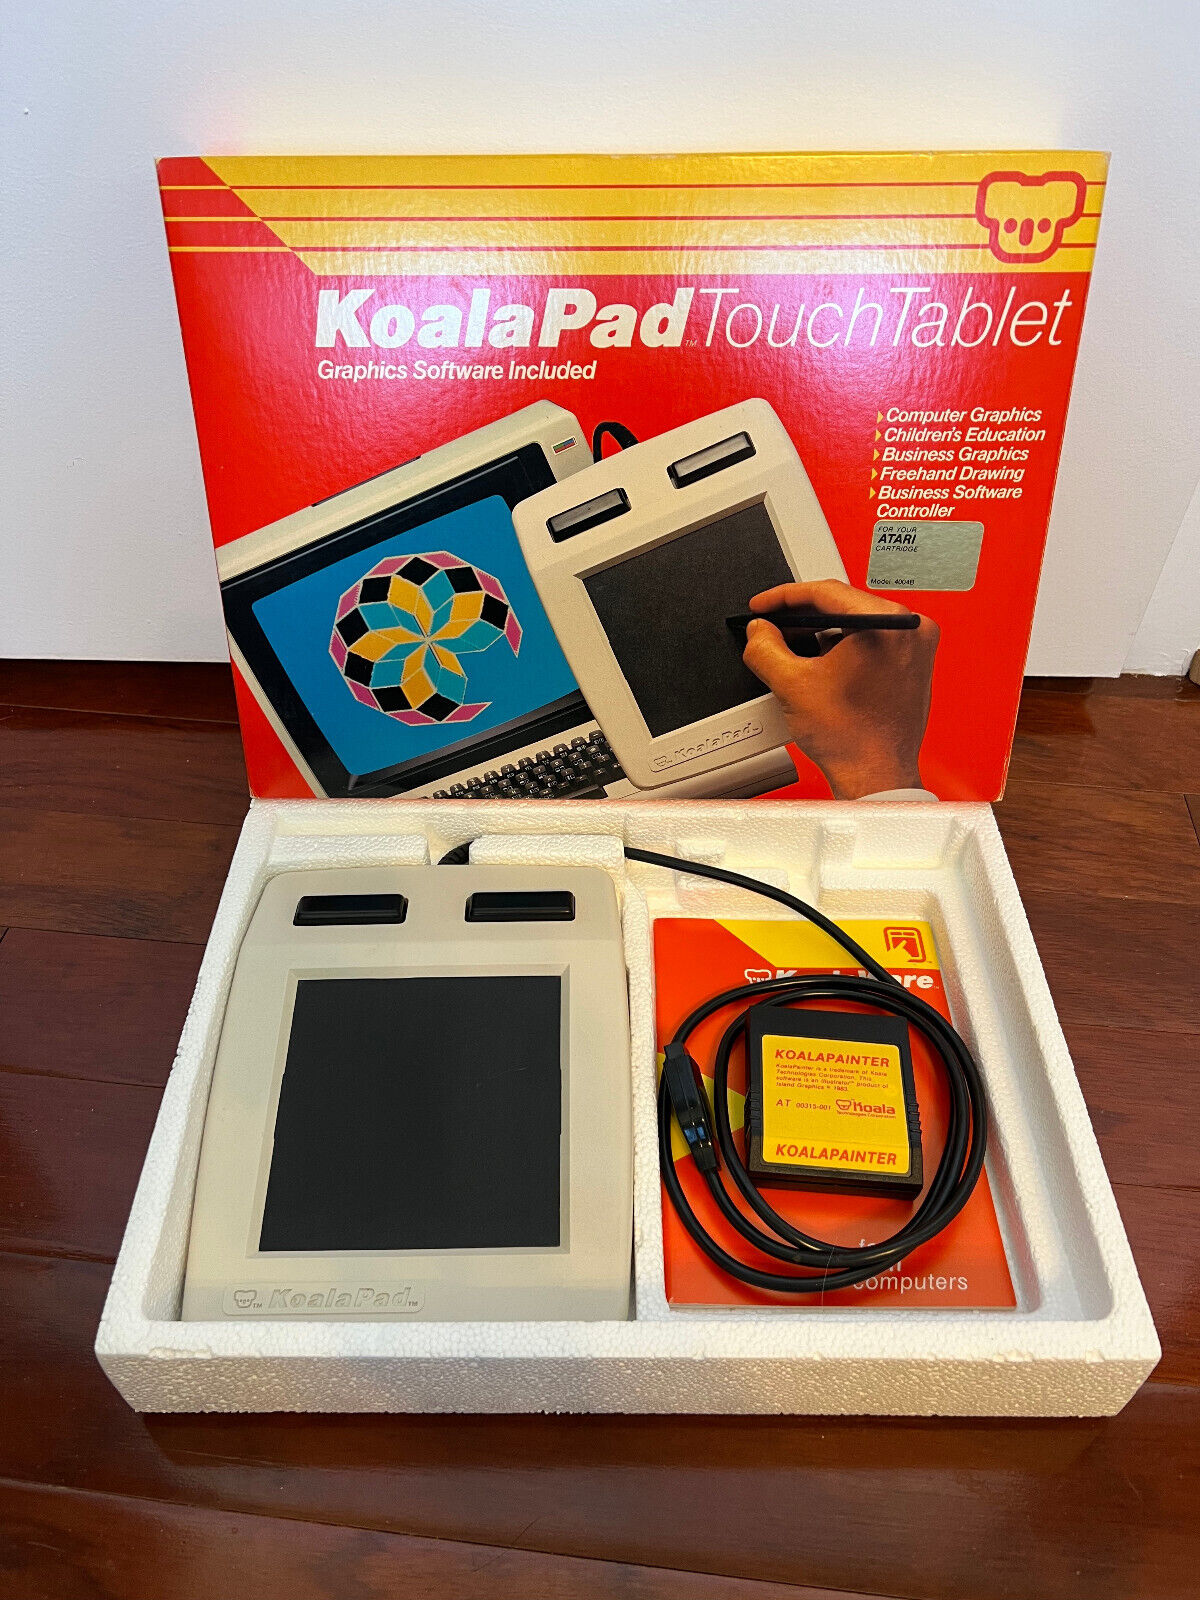 Atari KoalaPad Touch Tablet with Cartridge, Manual, & Box (No Stylus) - TESTED